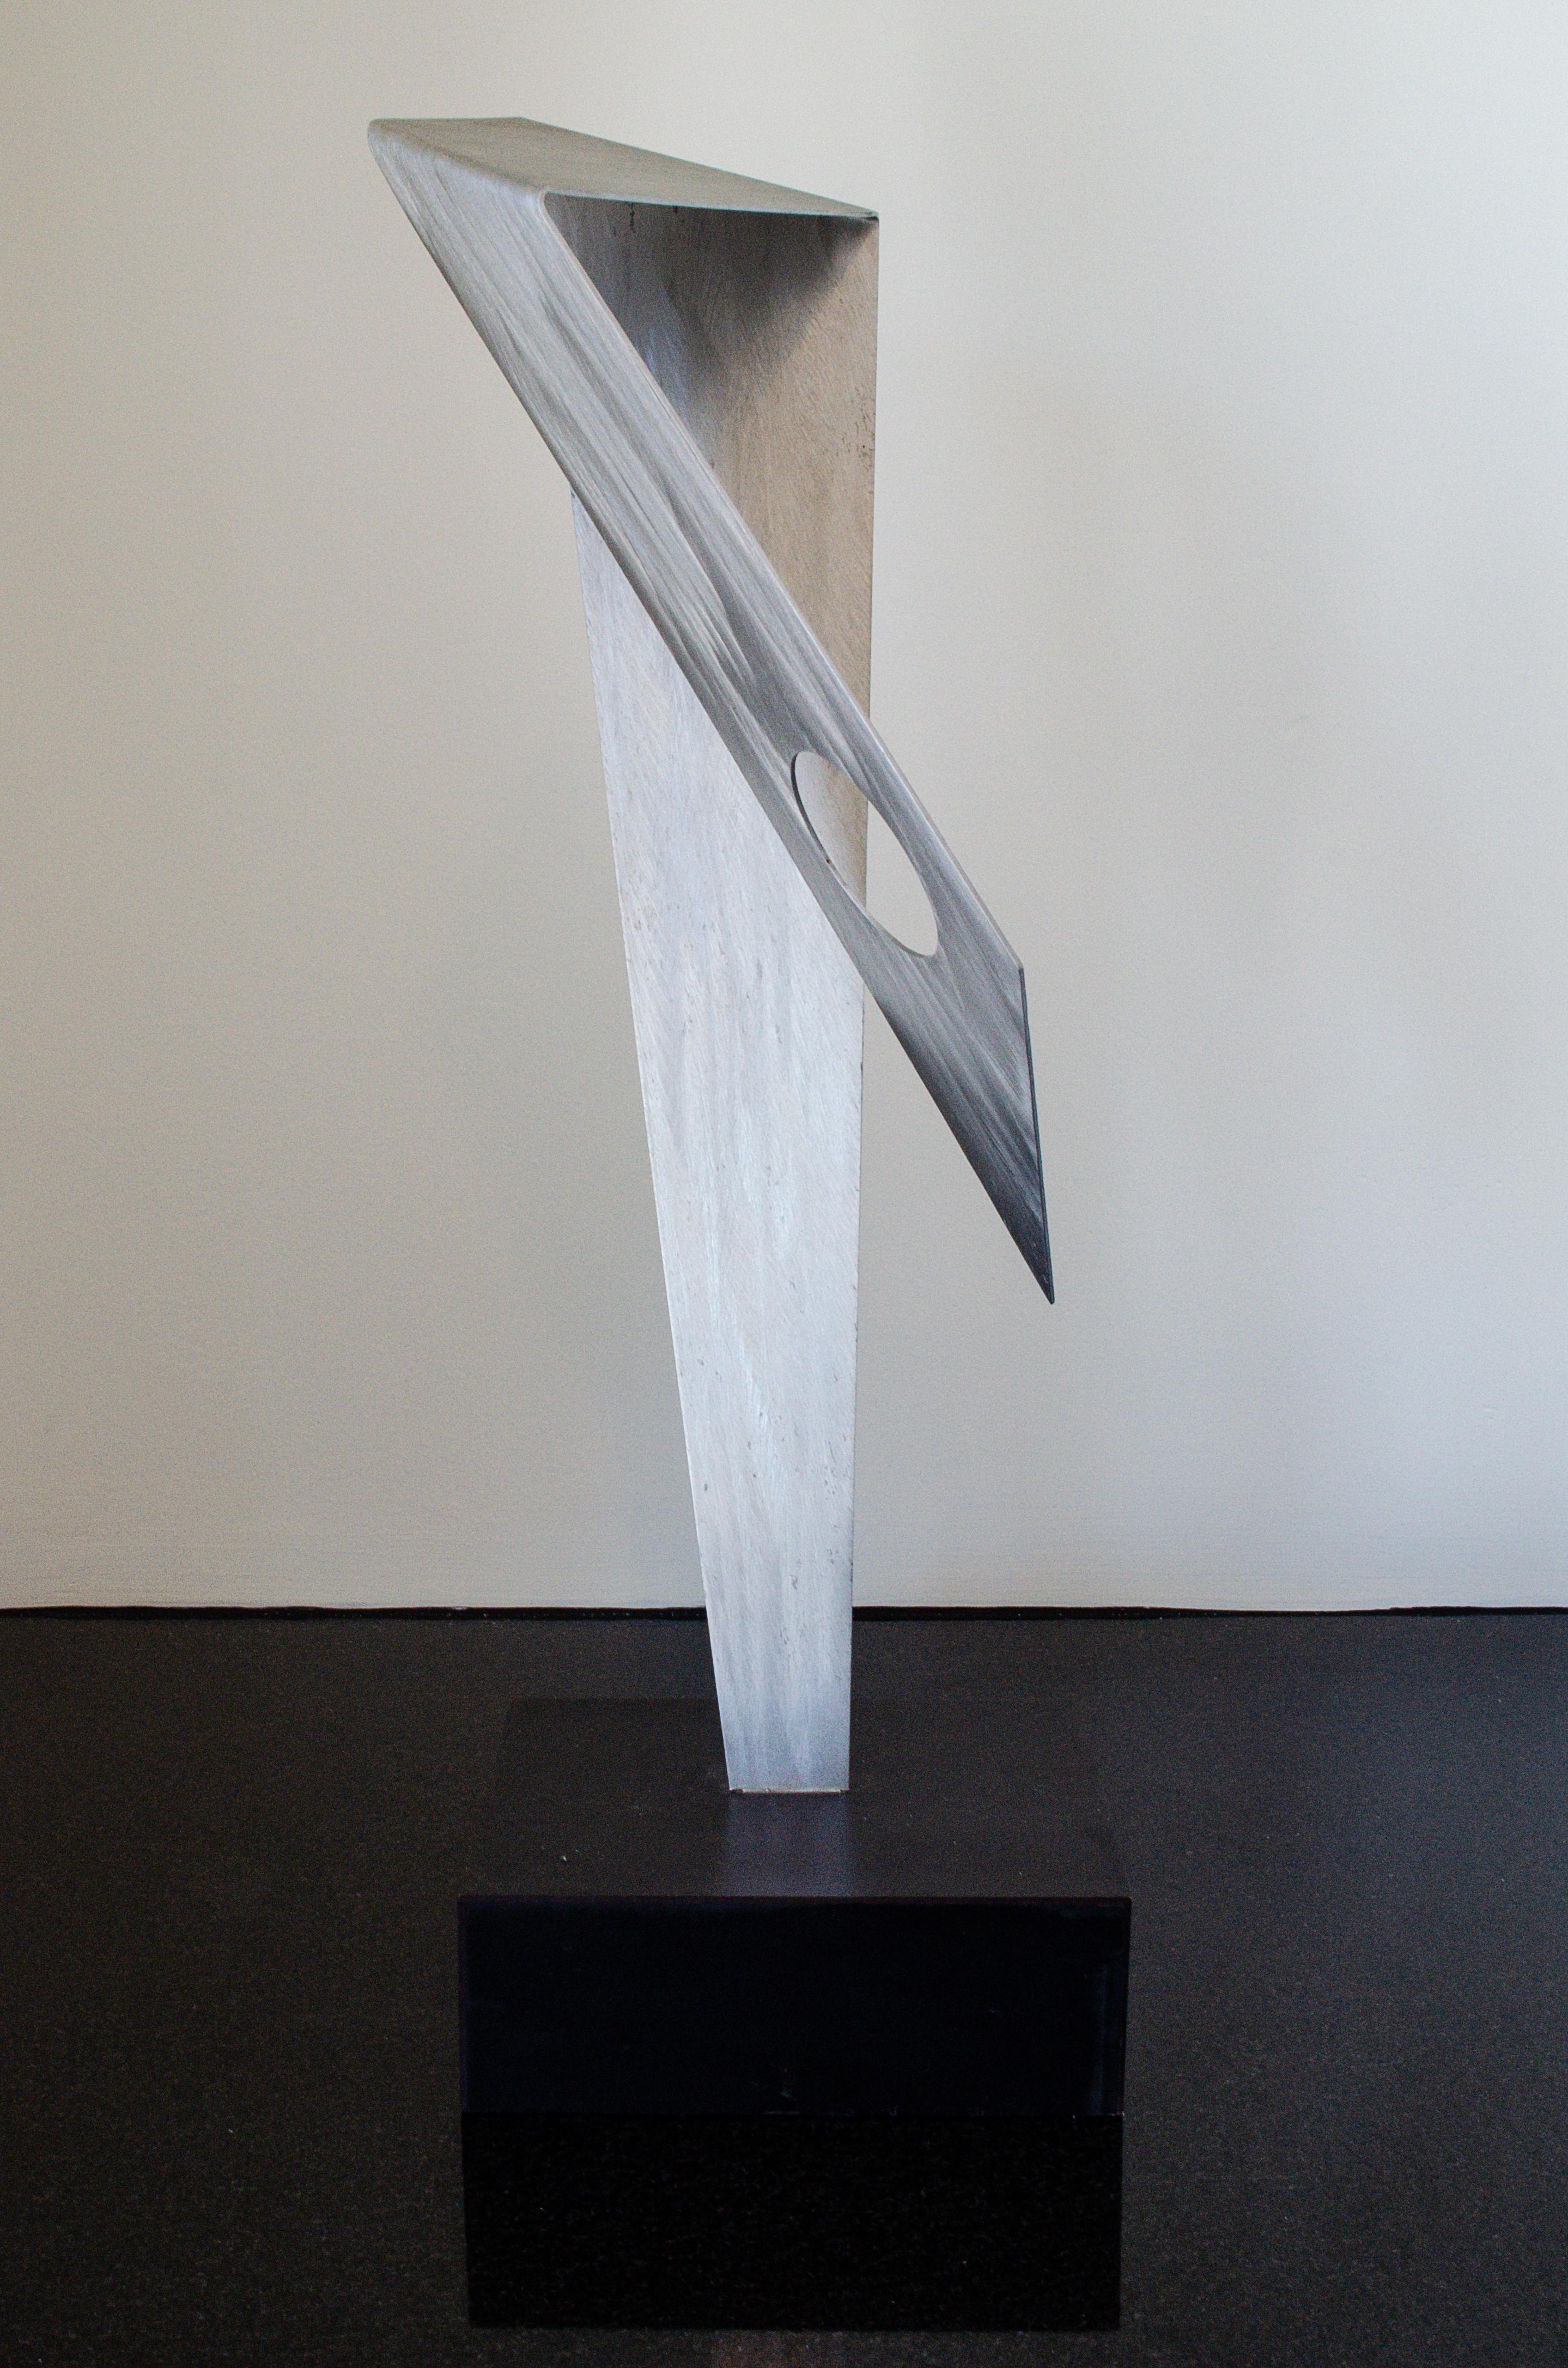 Paul Sisko (American, b. 1942)
Untitled, 1971
Stainless Steel
Sculpture: 18 1/4 x 6 x 4 1/2 in.
Base: 2 1/2 x 5 1/2 x 4 in. 
Signed: Paul Sisko 